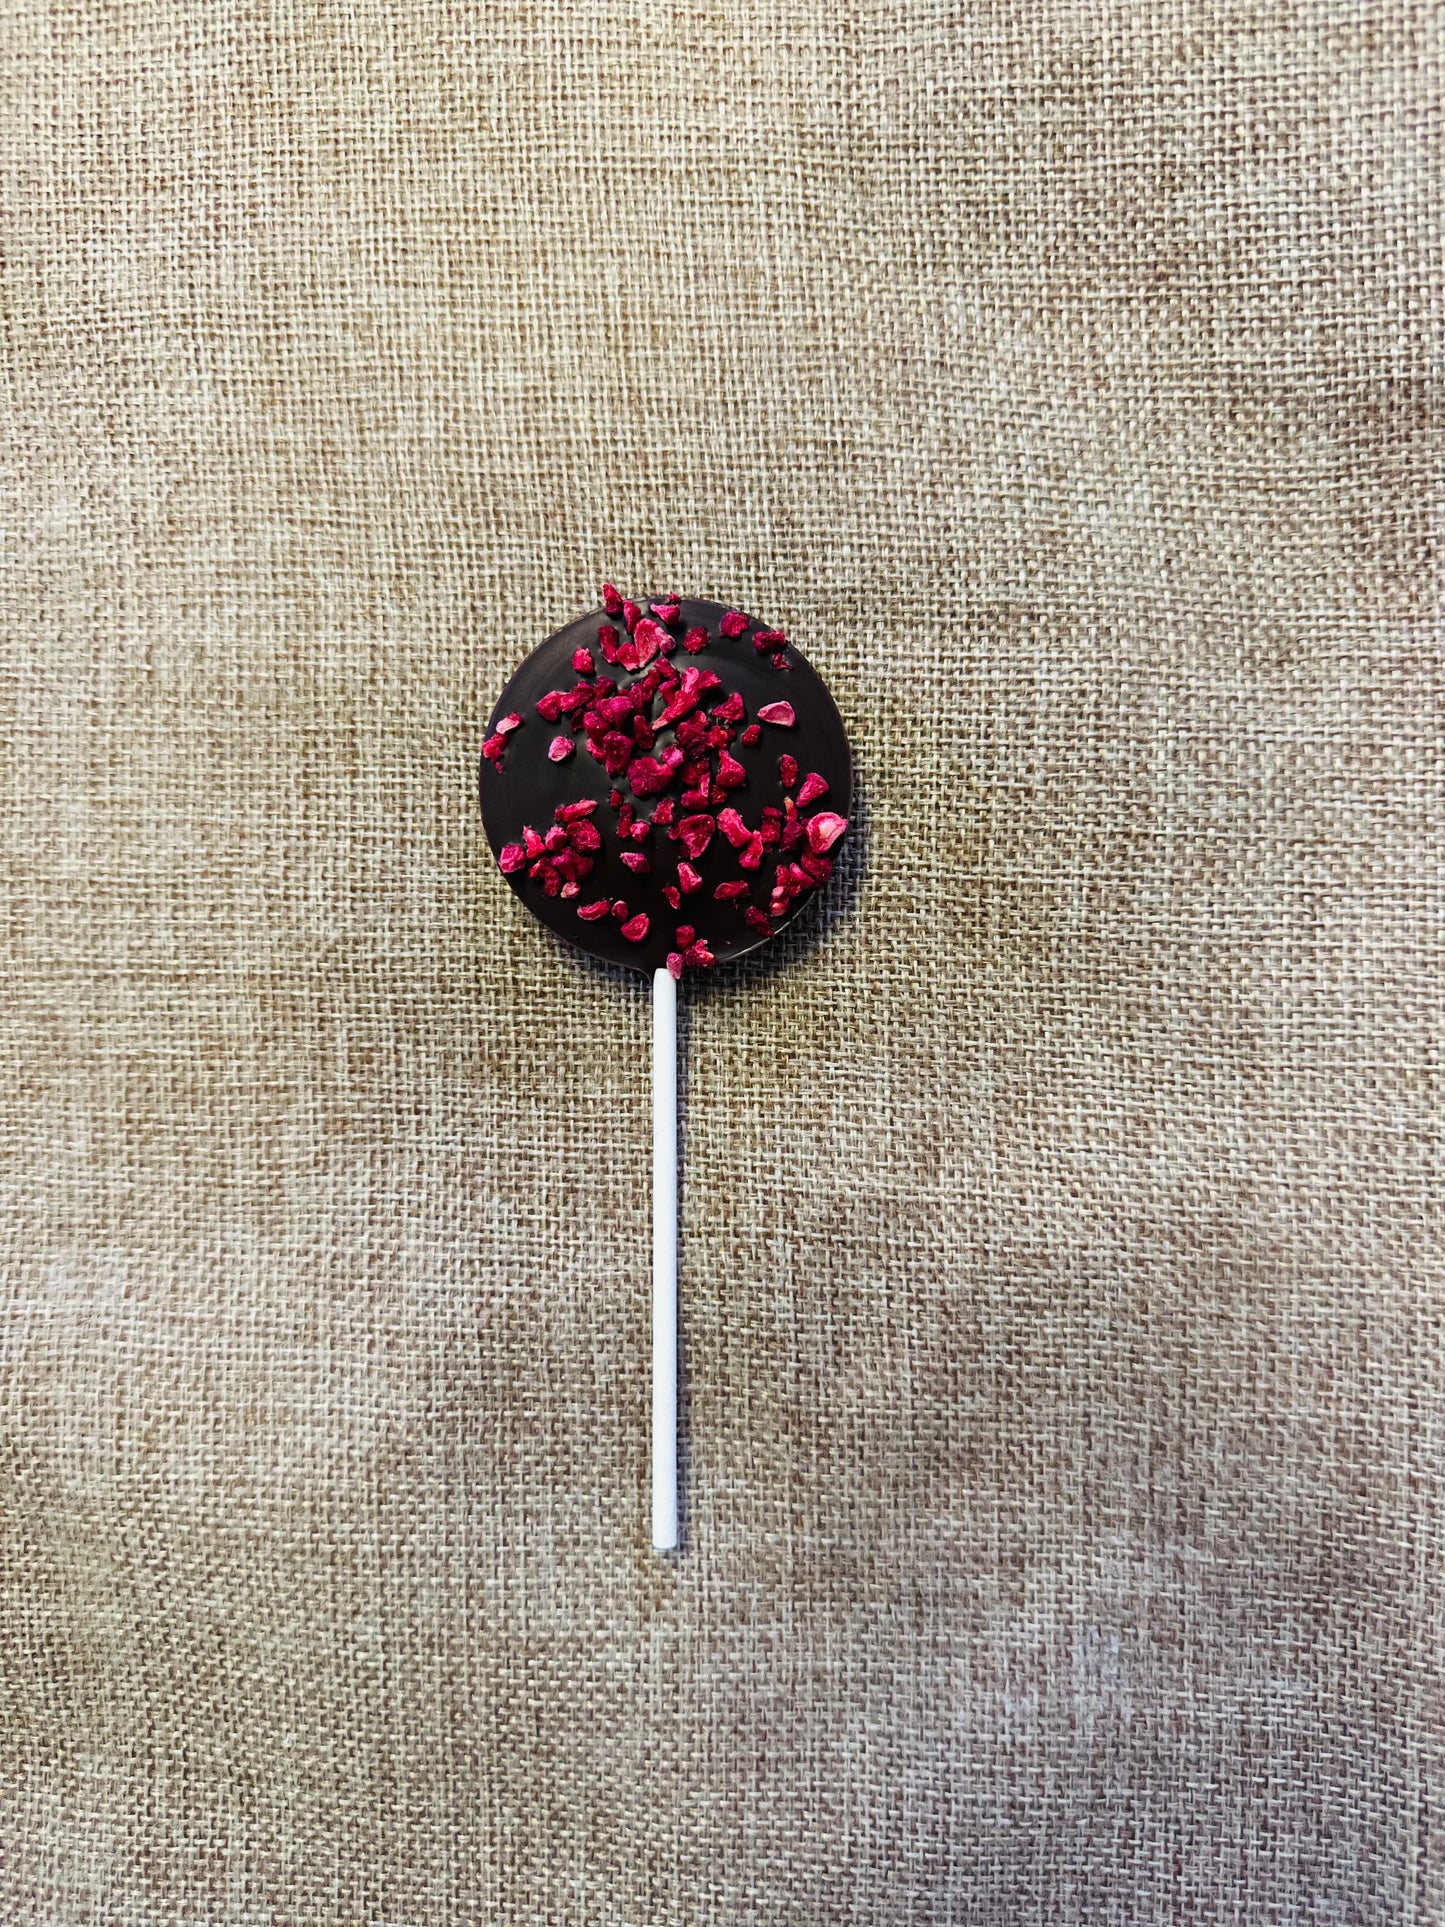 DARK CHOCOLATE LOLLIPOP with raspberry